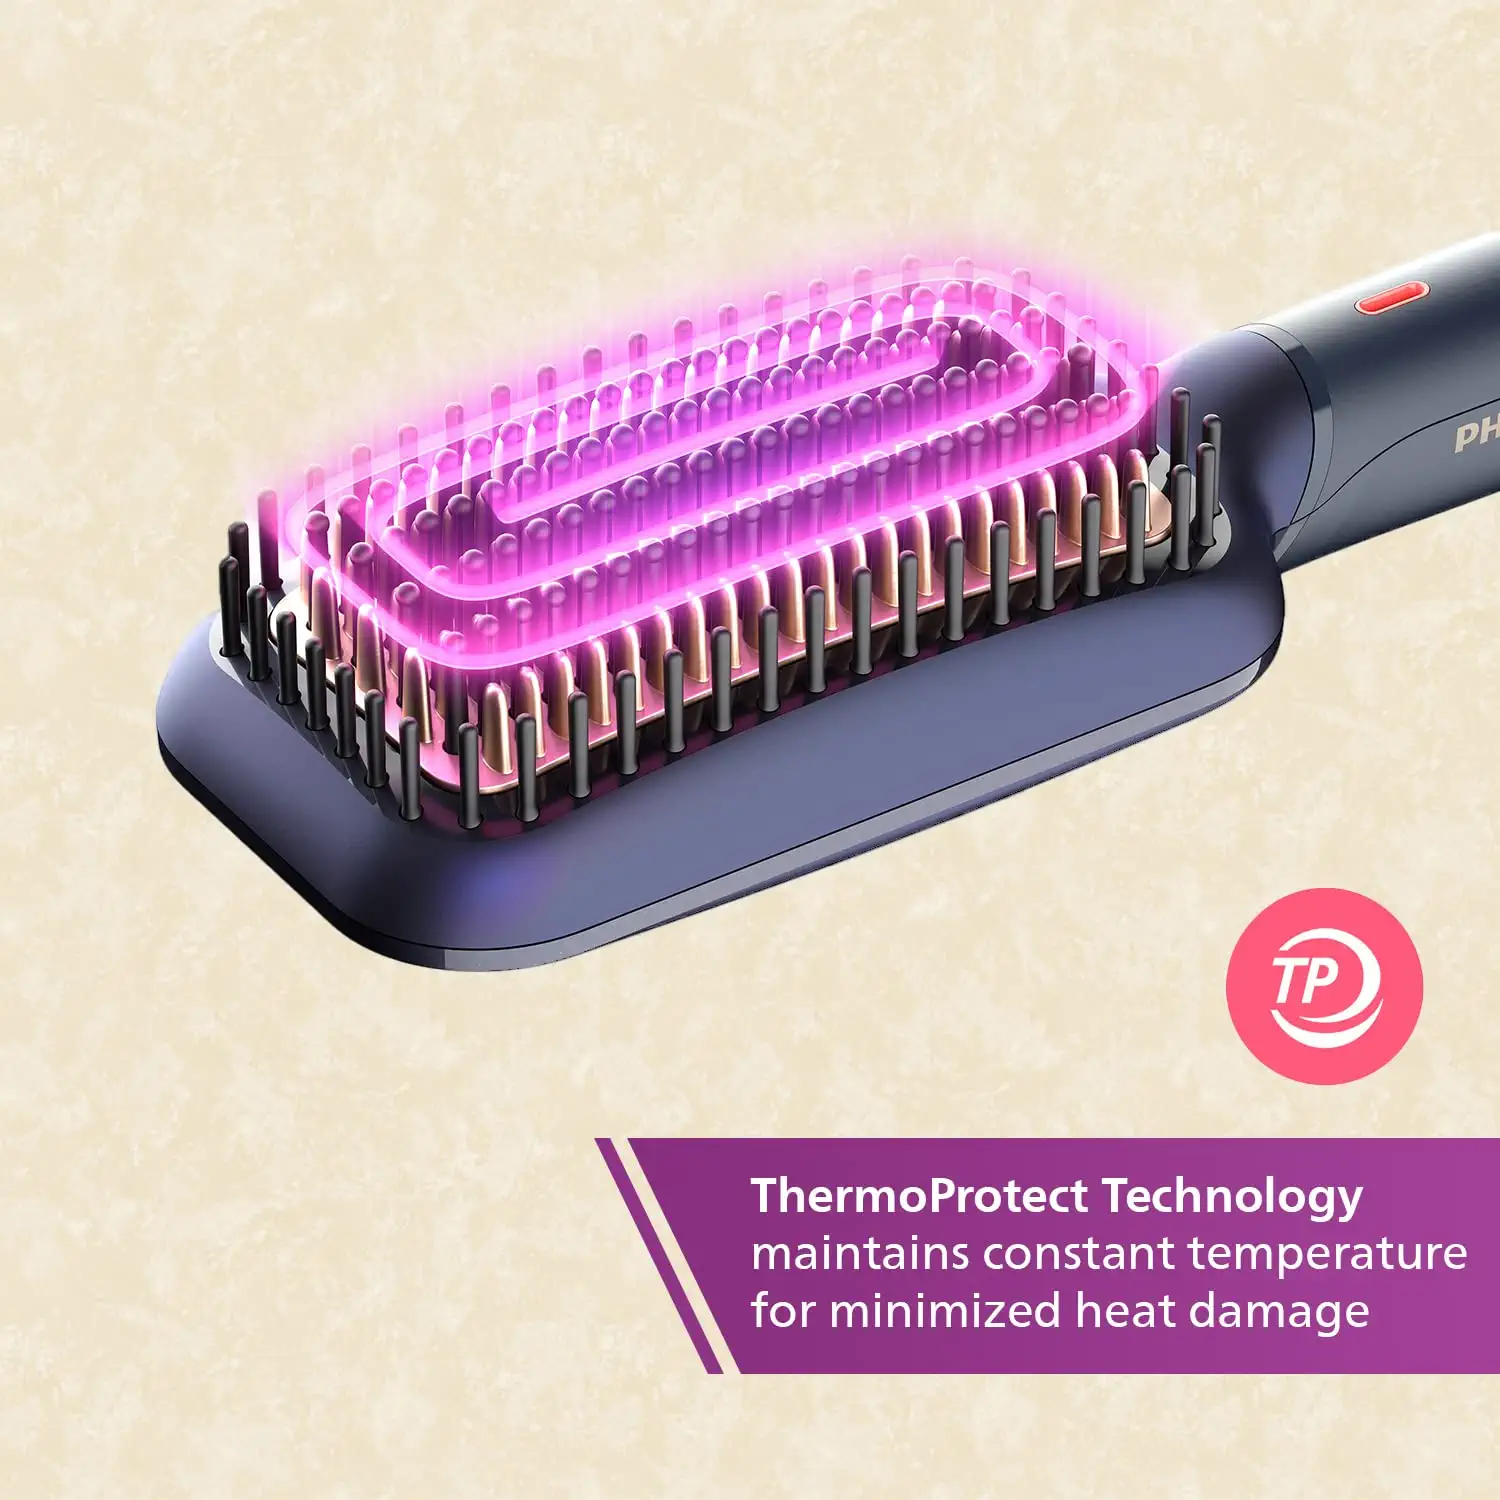 Philips Heated Straightening Brush BHH885/10 (New). ThermoProtect Technology, Ionic care - Mahajan Electronics Online